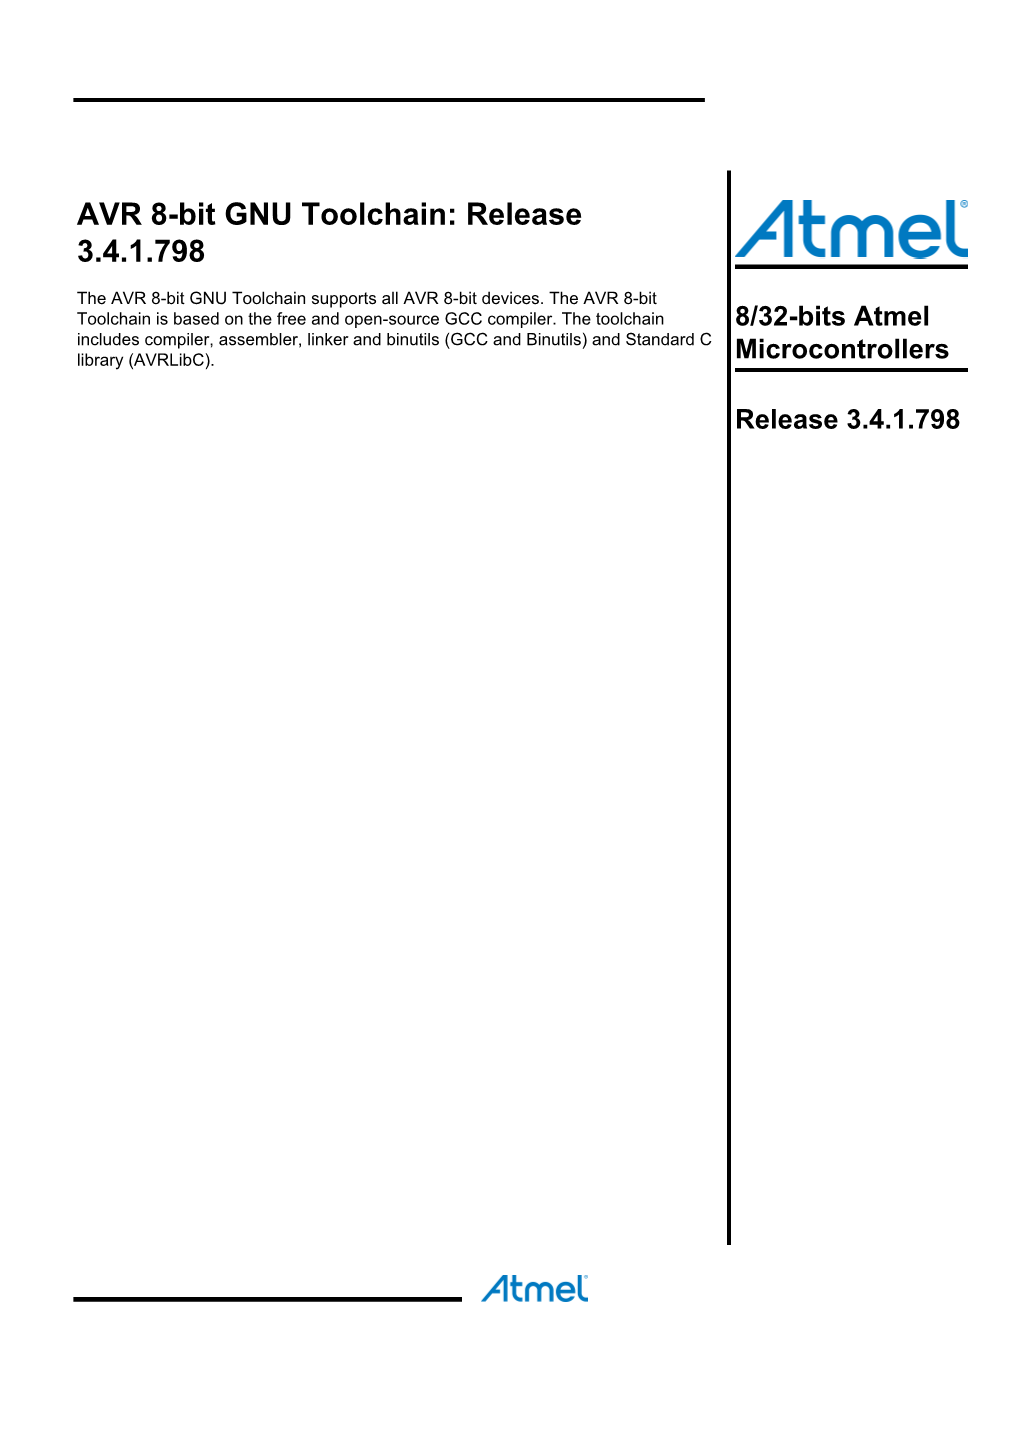 AVR 8-Bit GNU Toolchain: Release 3.4.1.798